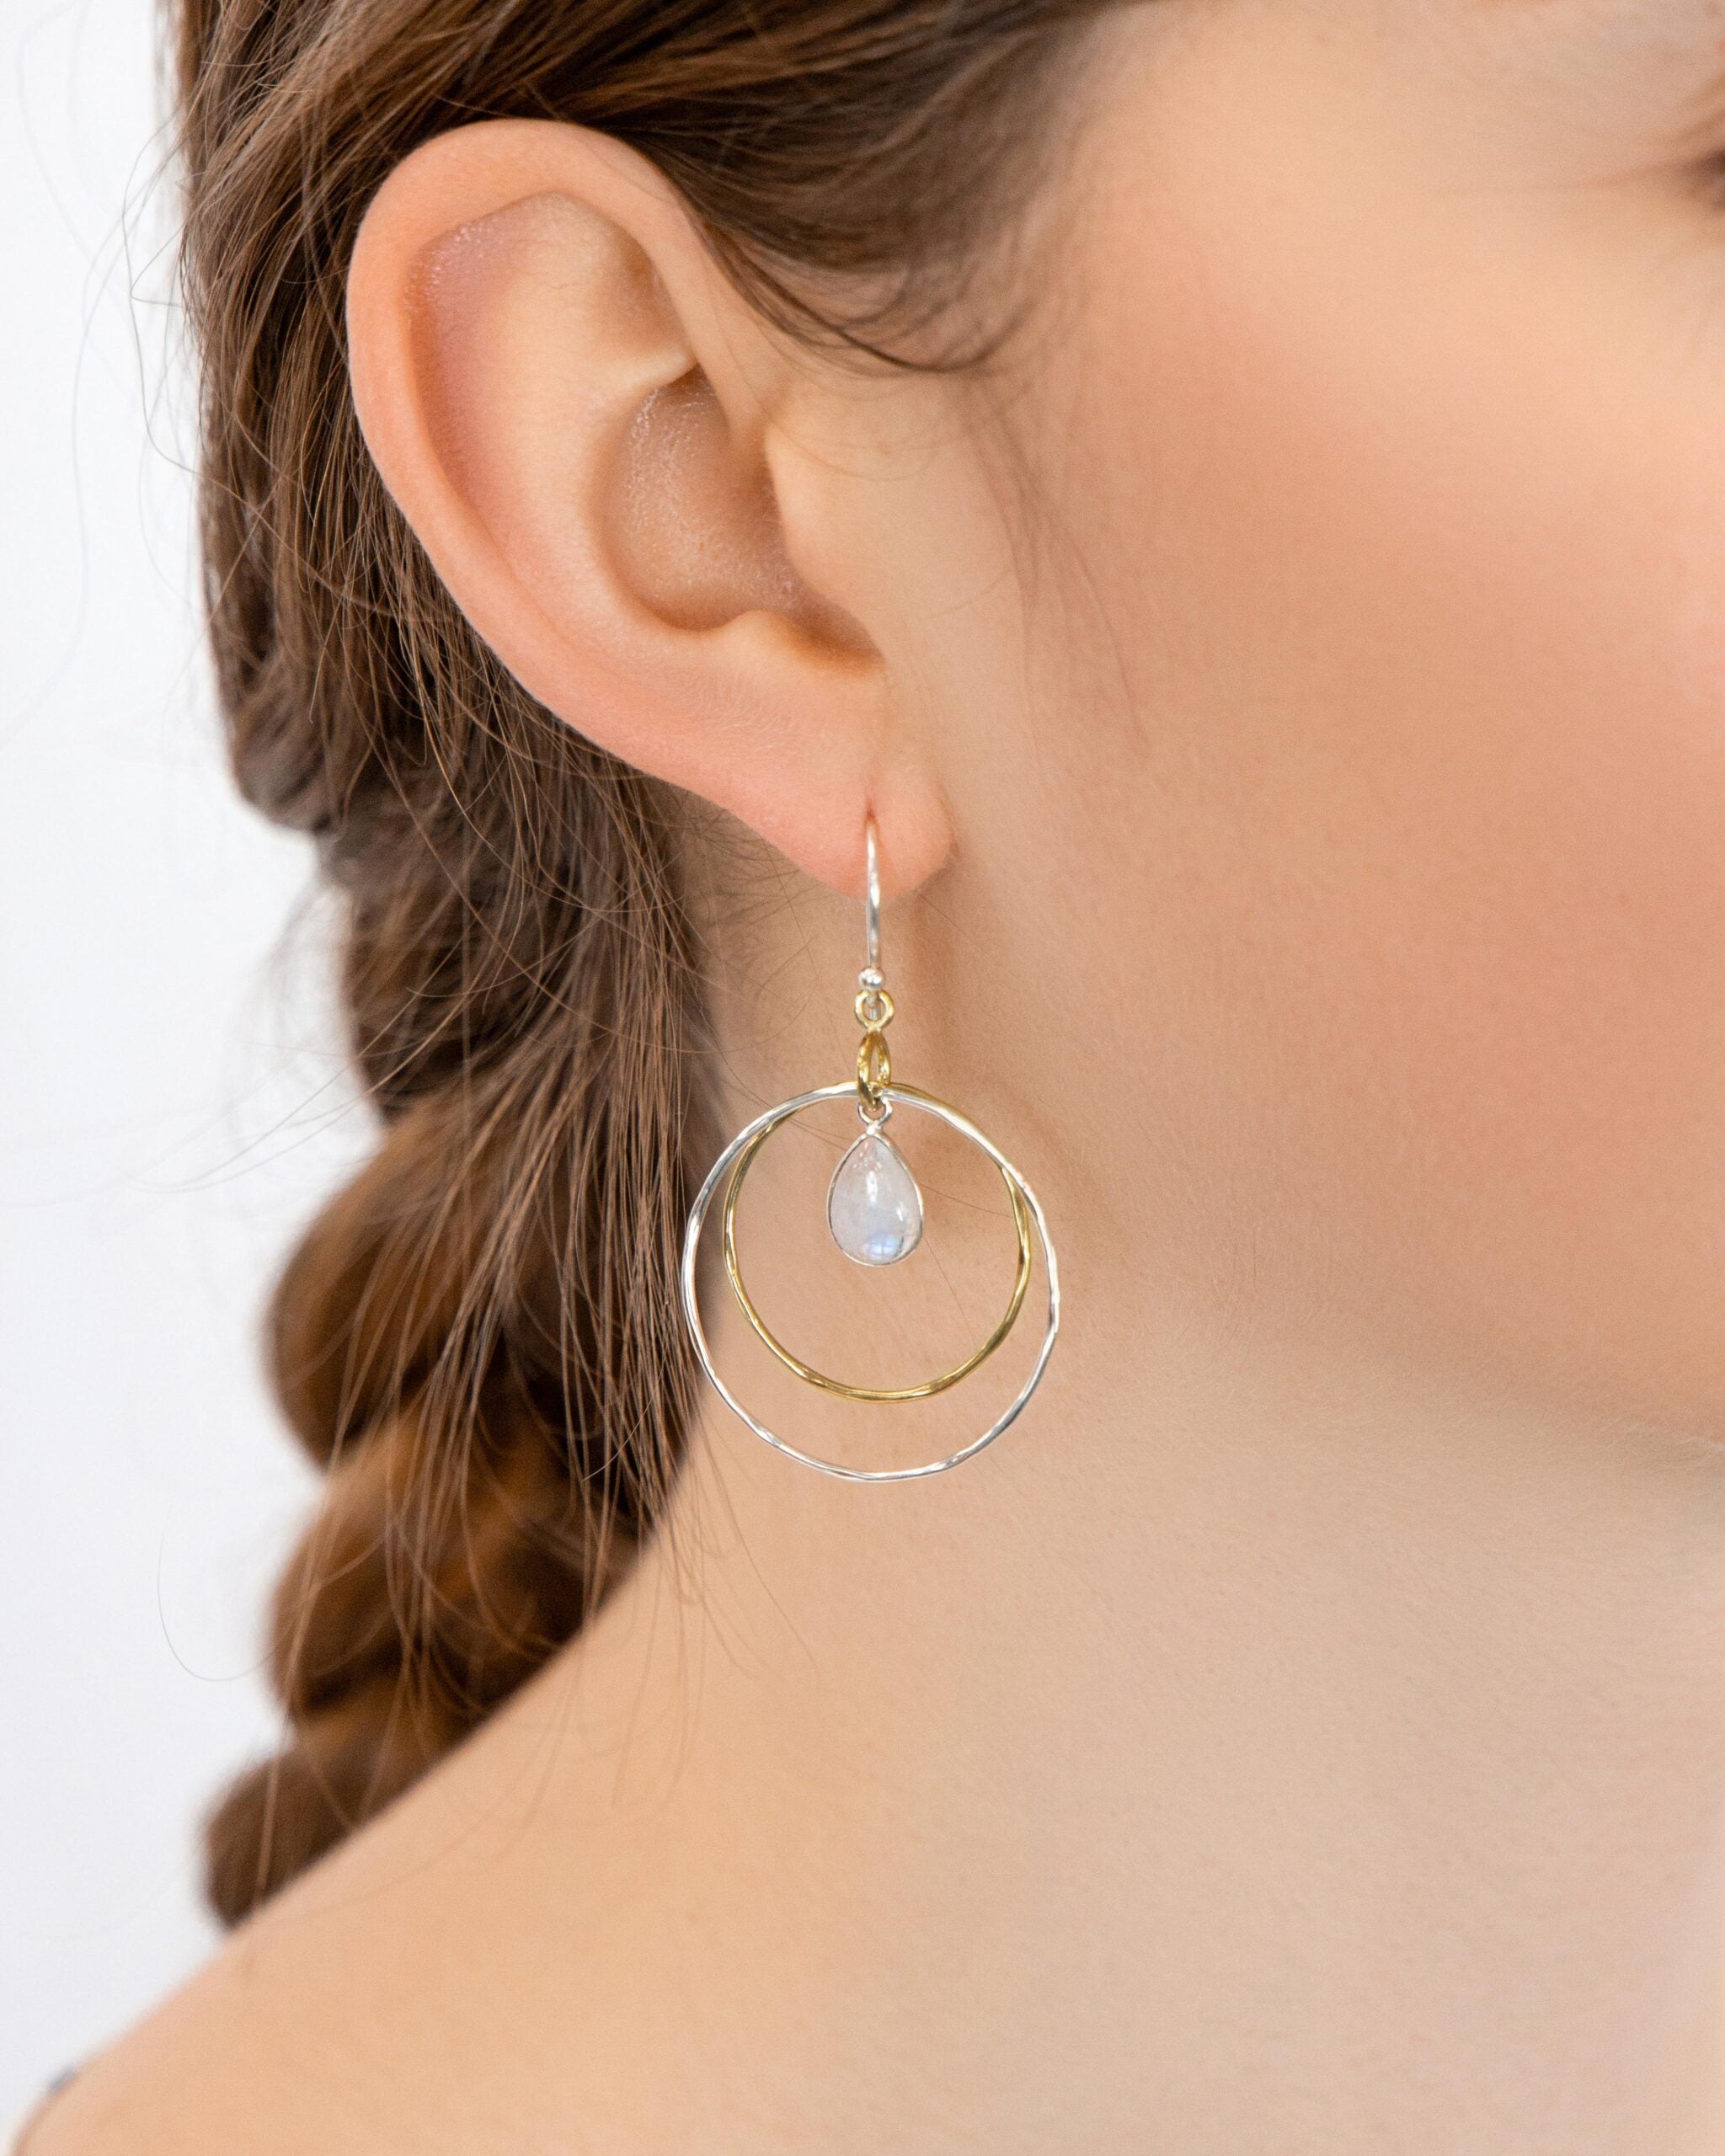 Moonstone Hoop Earrings - The Nancy Smillie Shop - Art, Jewellery & Designer Gifts Glasgow